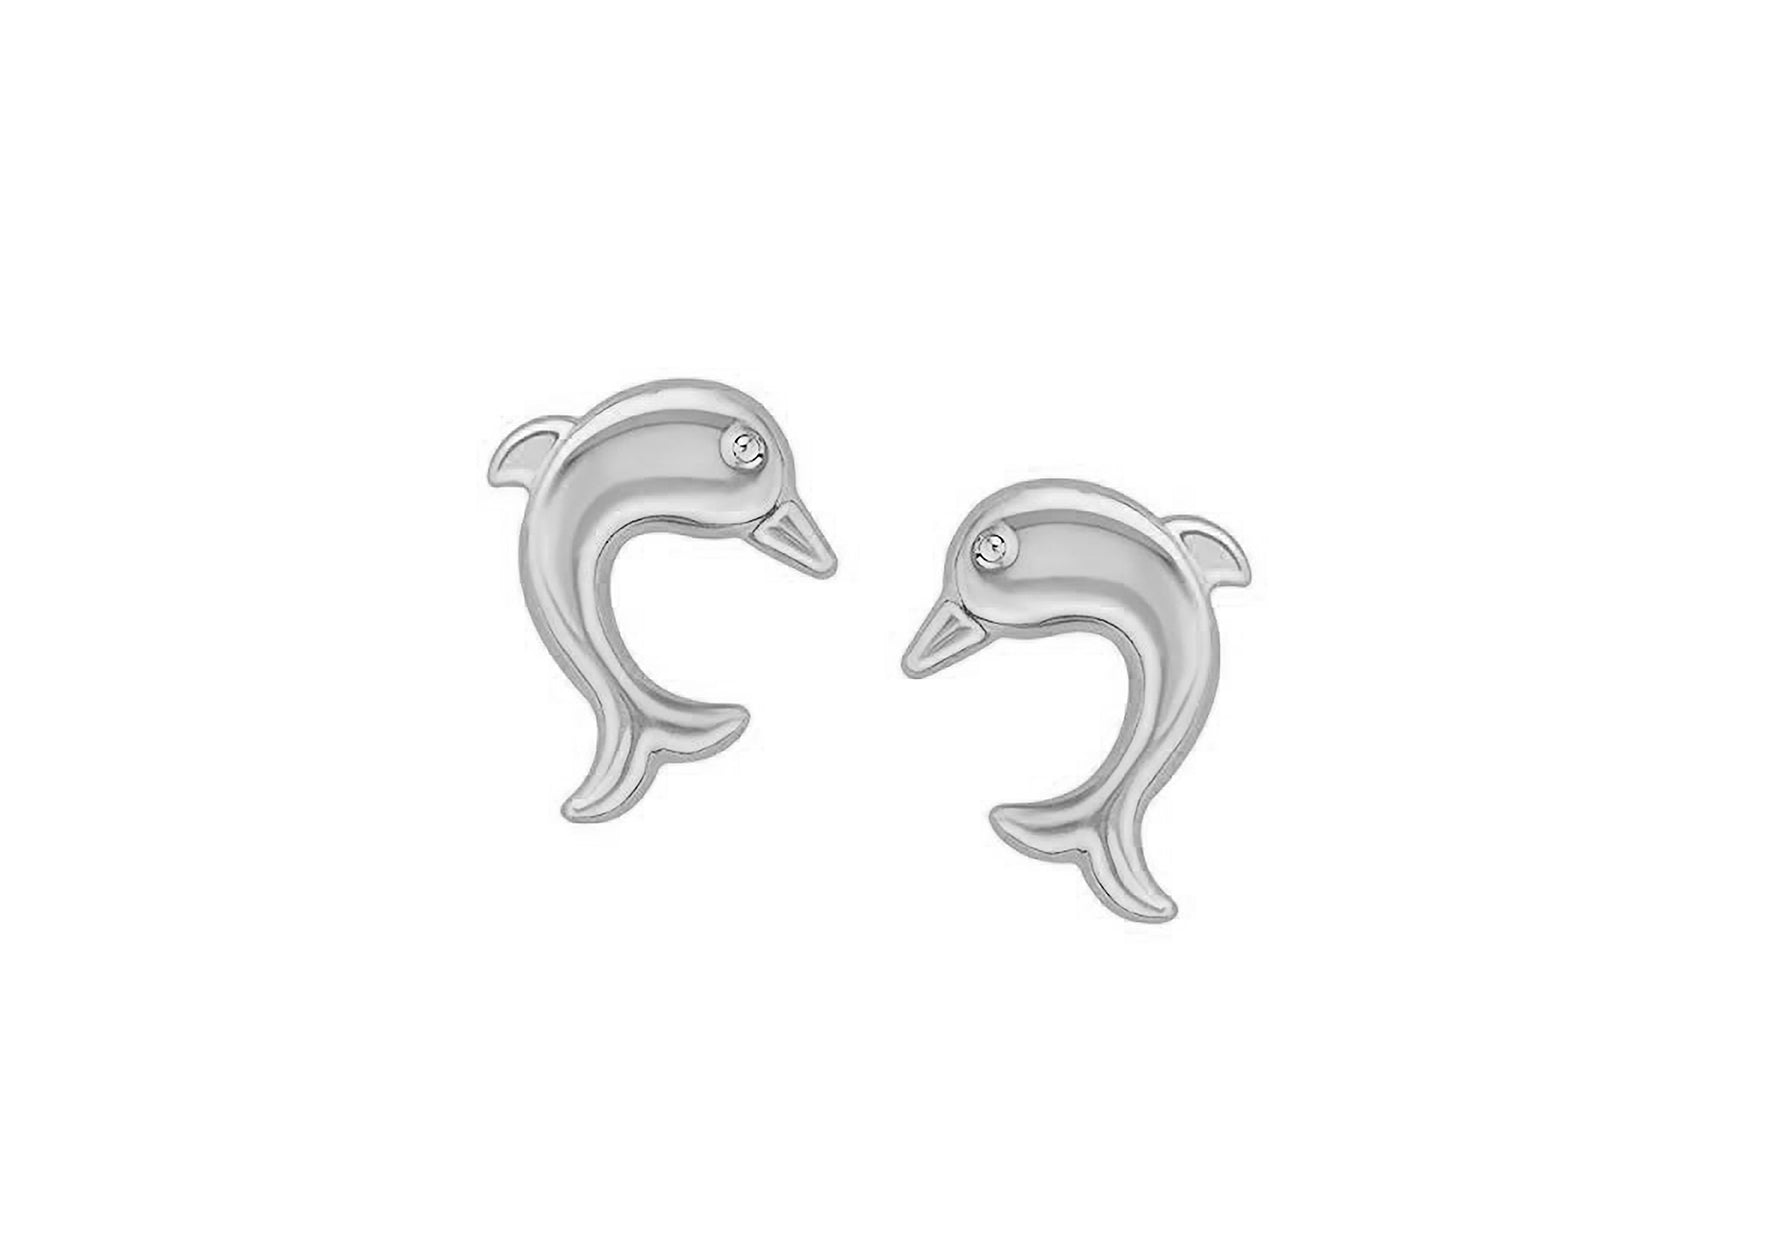 Gold Stud Earrings - Dolphin Earrings With 14k Purity